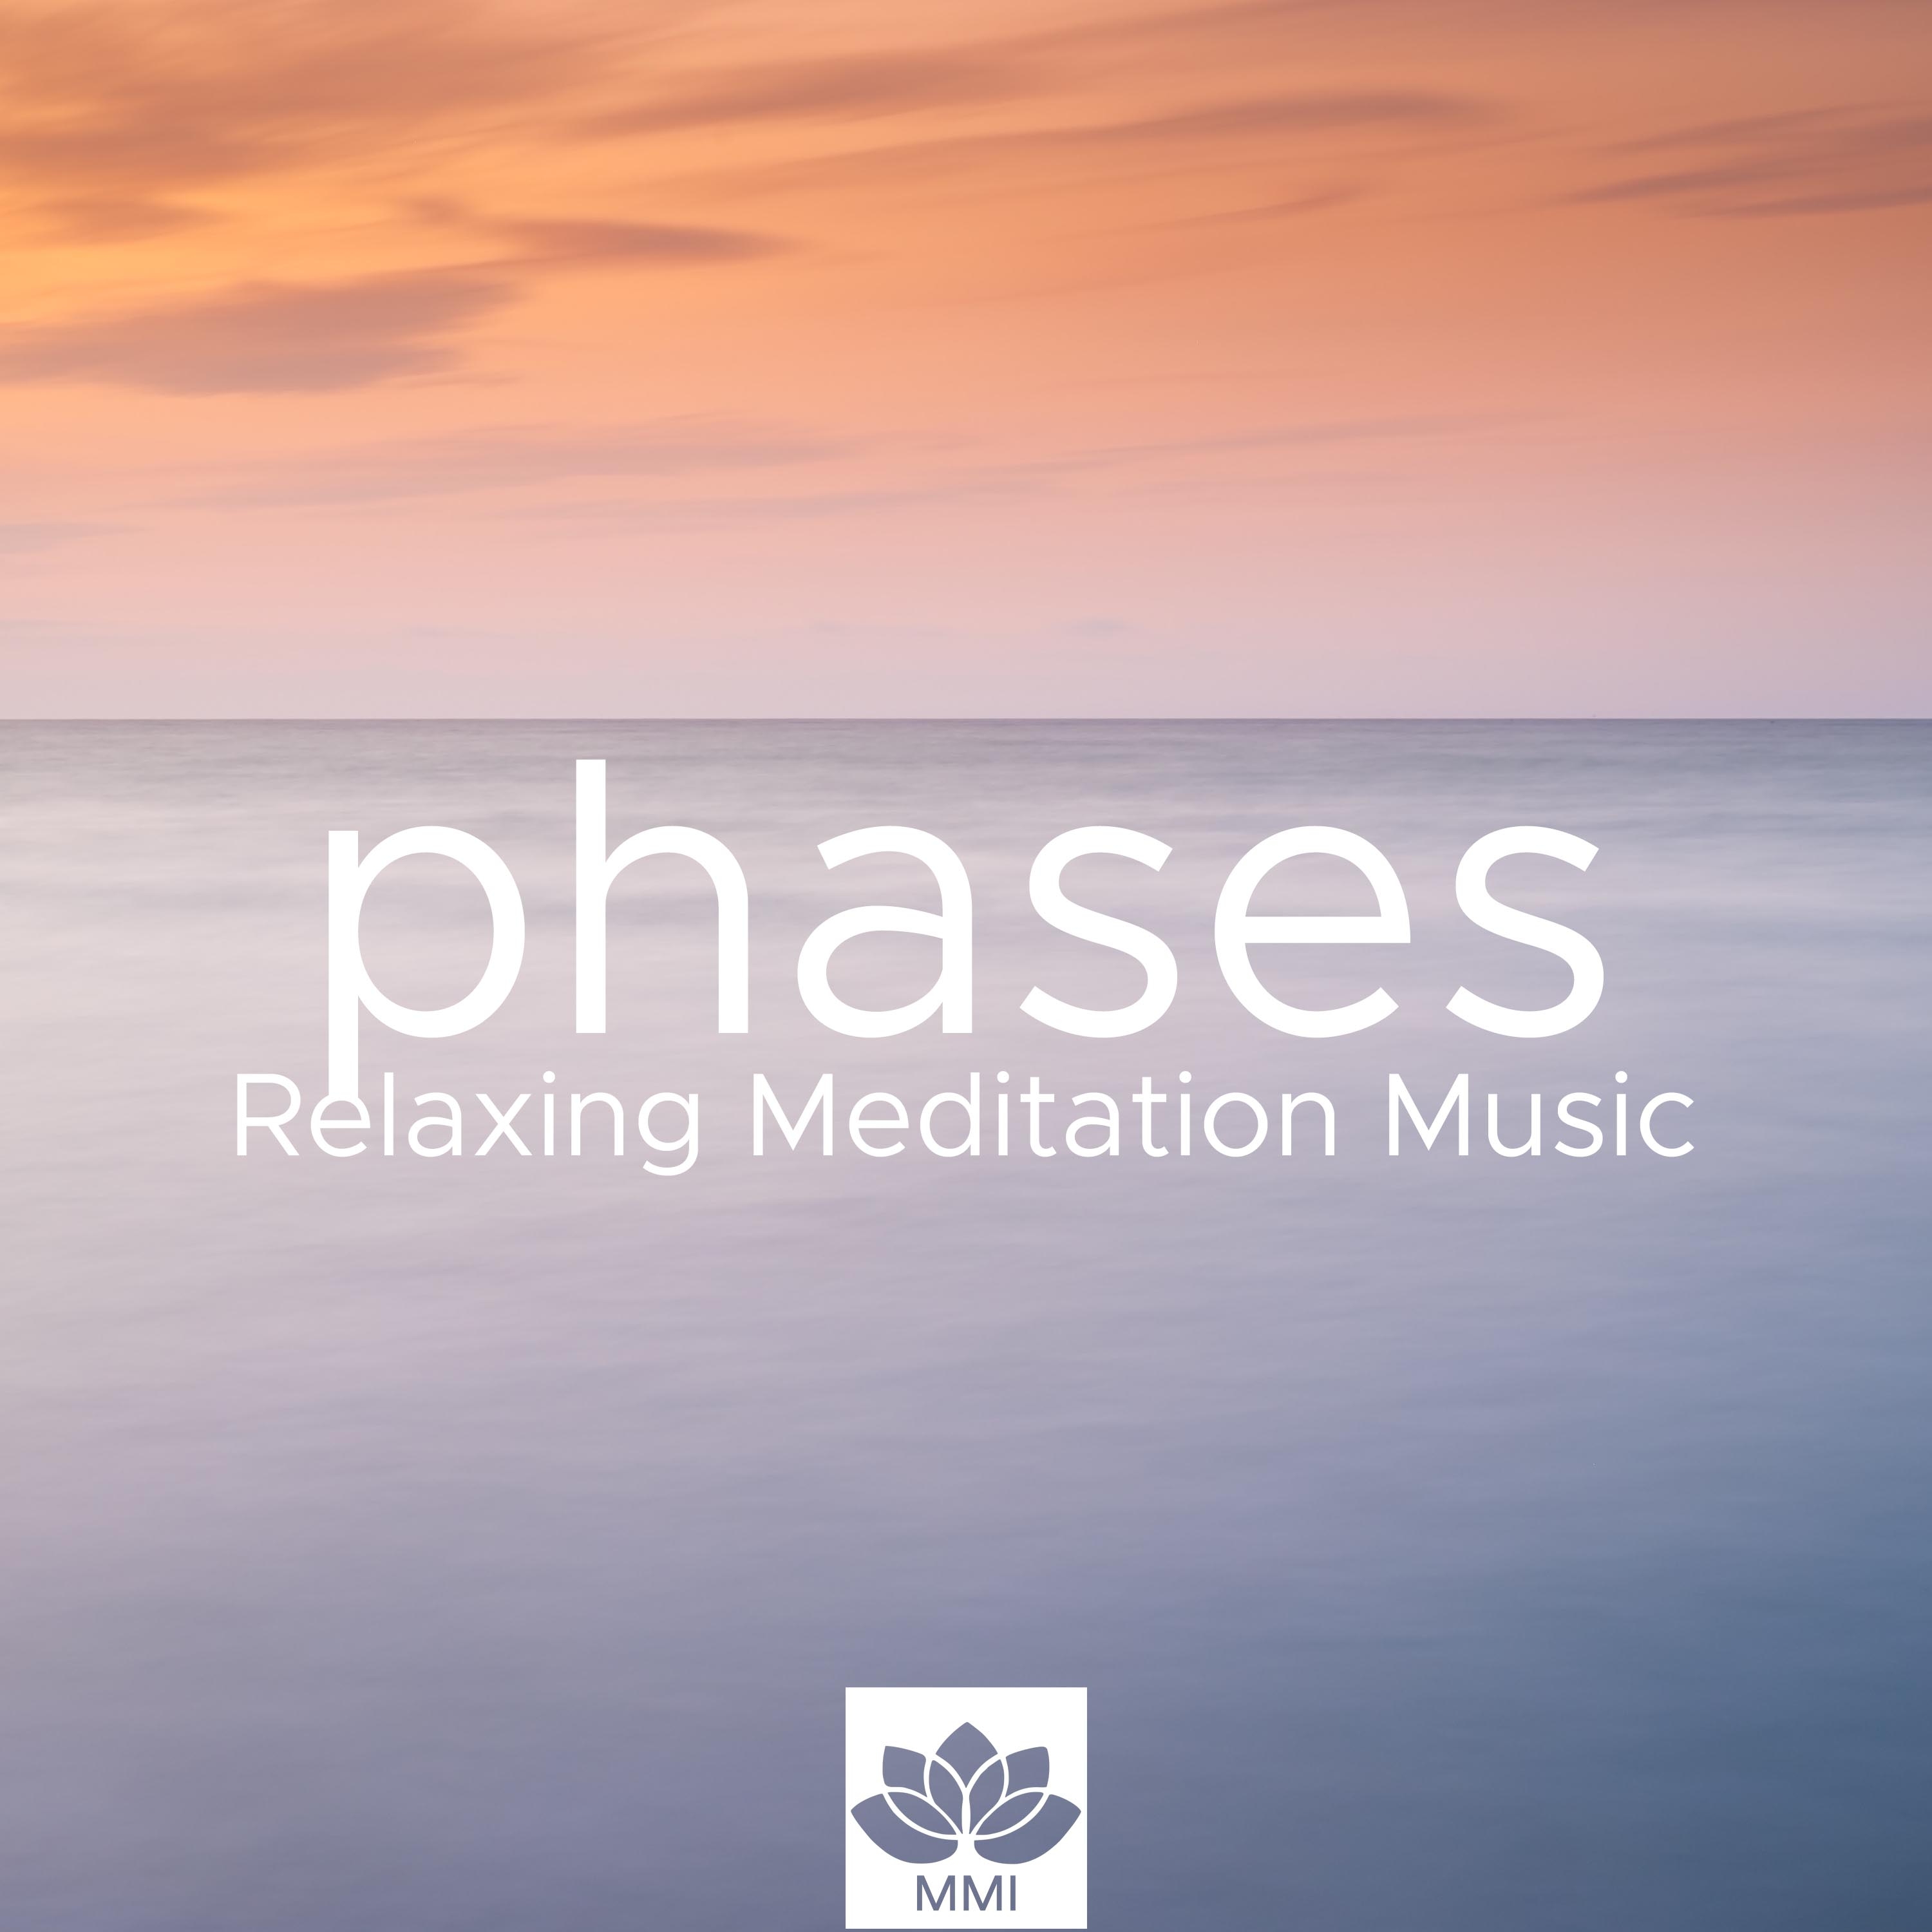 Restful Sleep with Healing Meditation Music